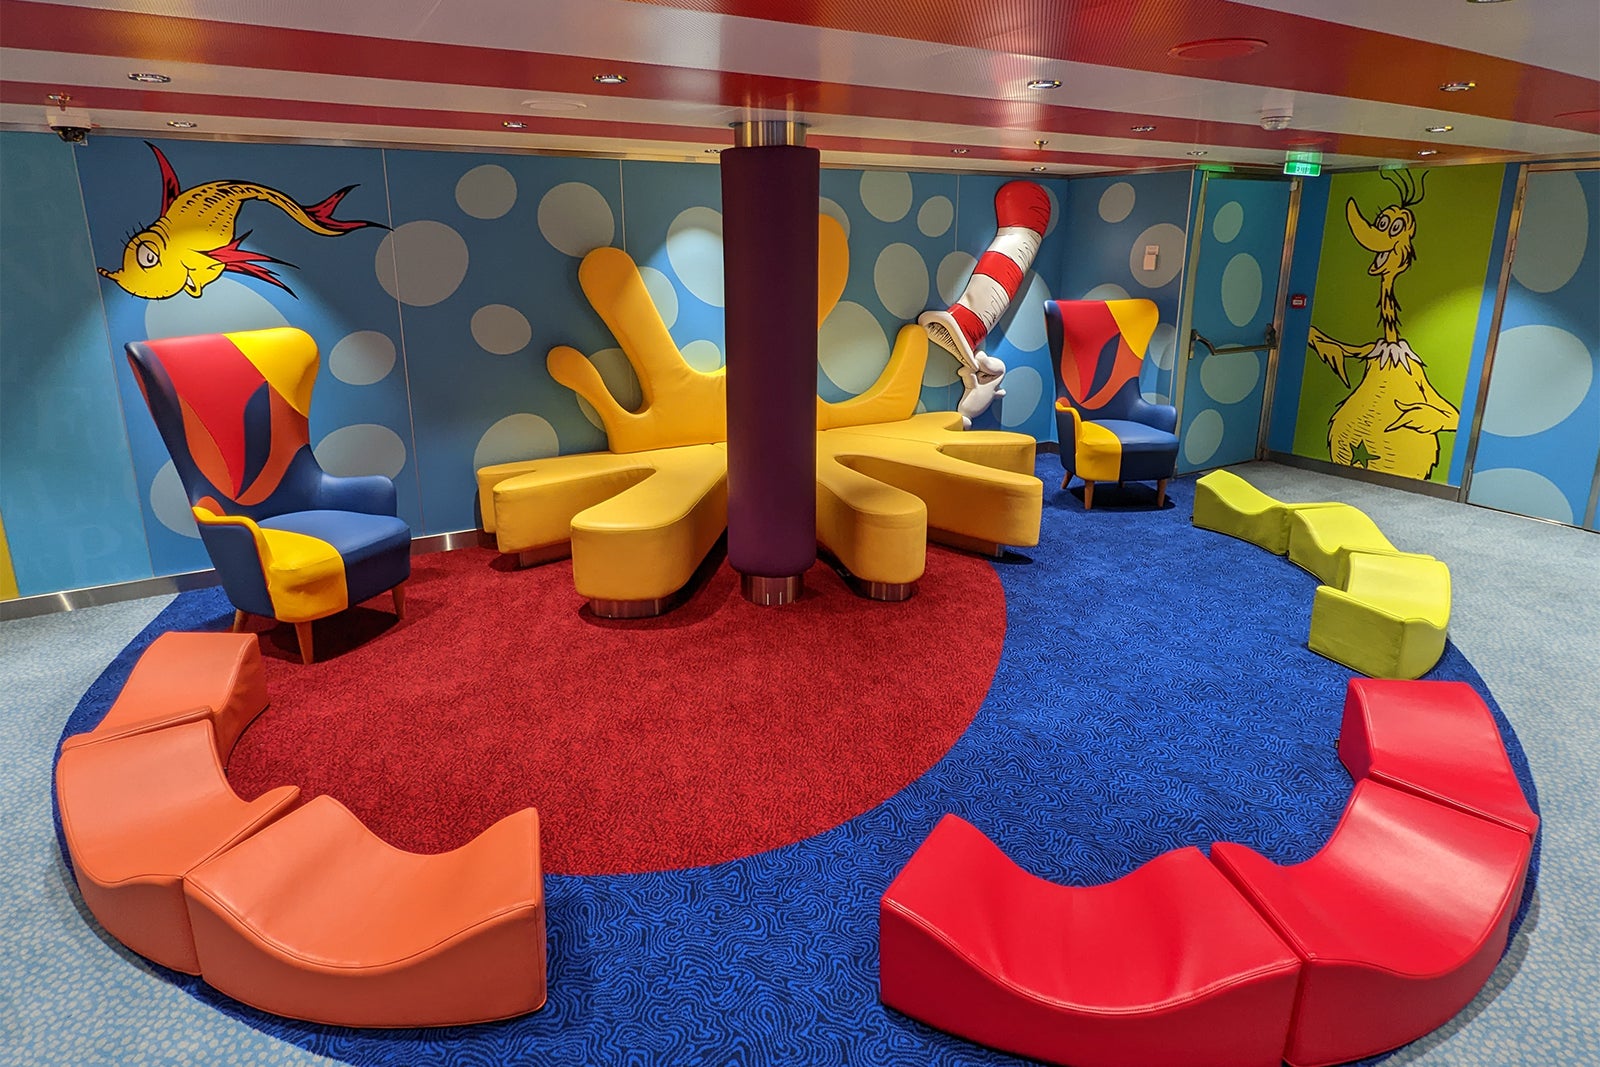 Dr. Seuss themed room in Carnival Celebration's kids club.